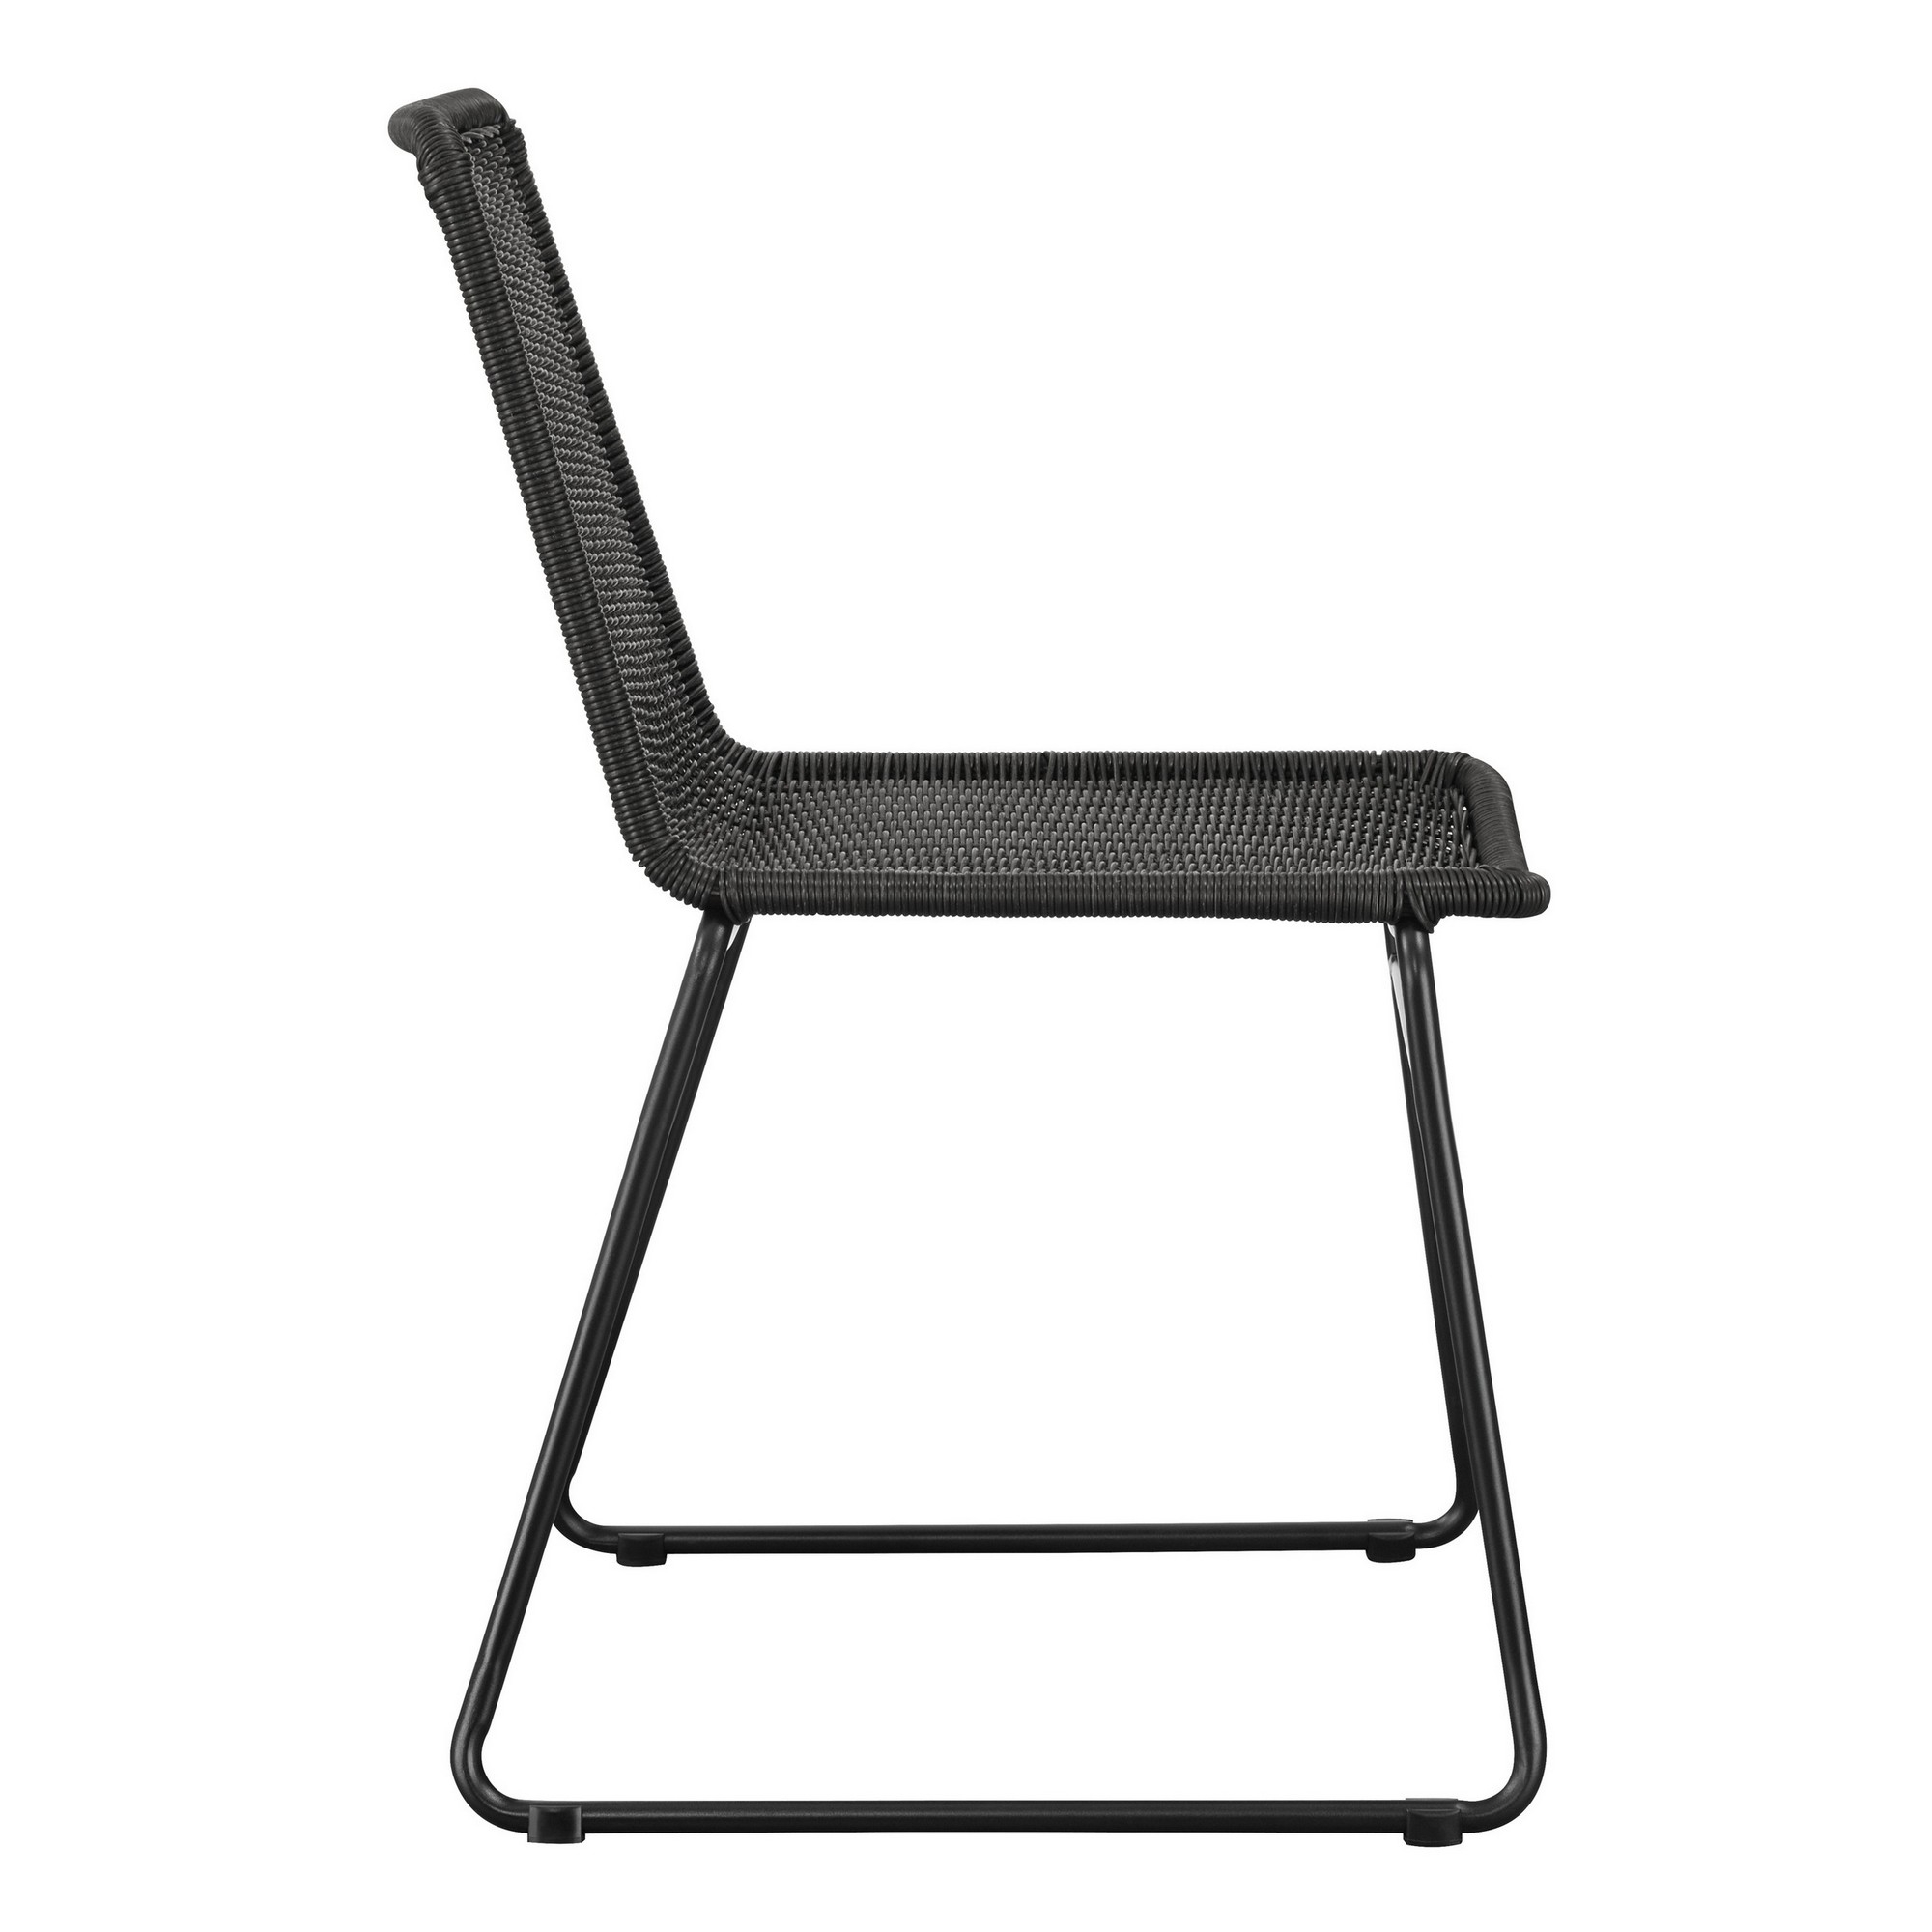 22 Inch Dining Chair, Set Of 2, Brown Rattan Woven Seat, Black Metal Frame- Saltoro Sherpi